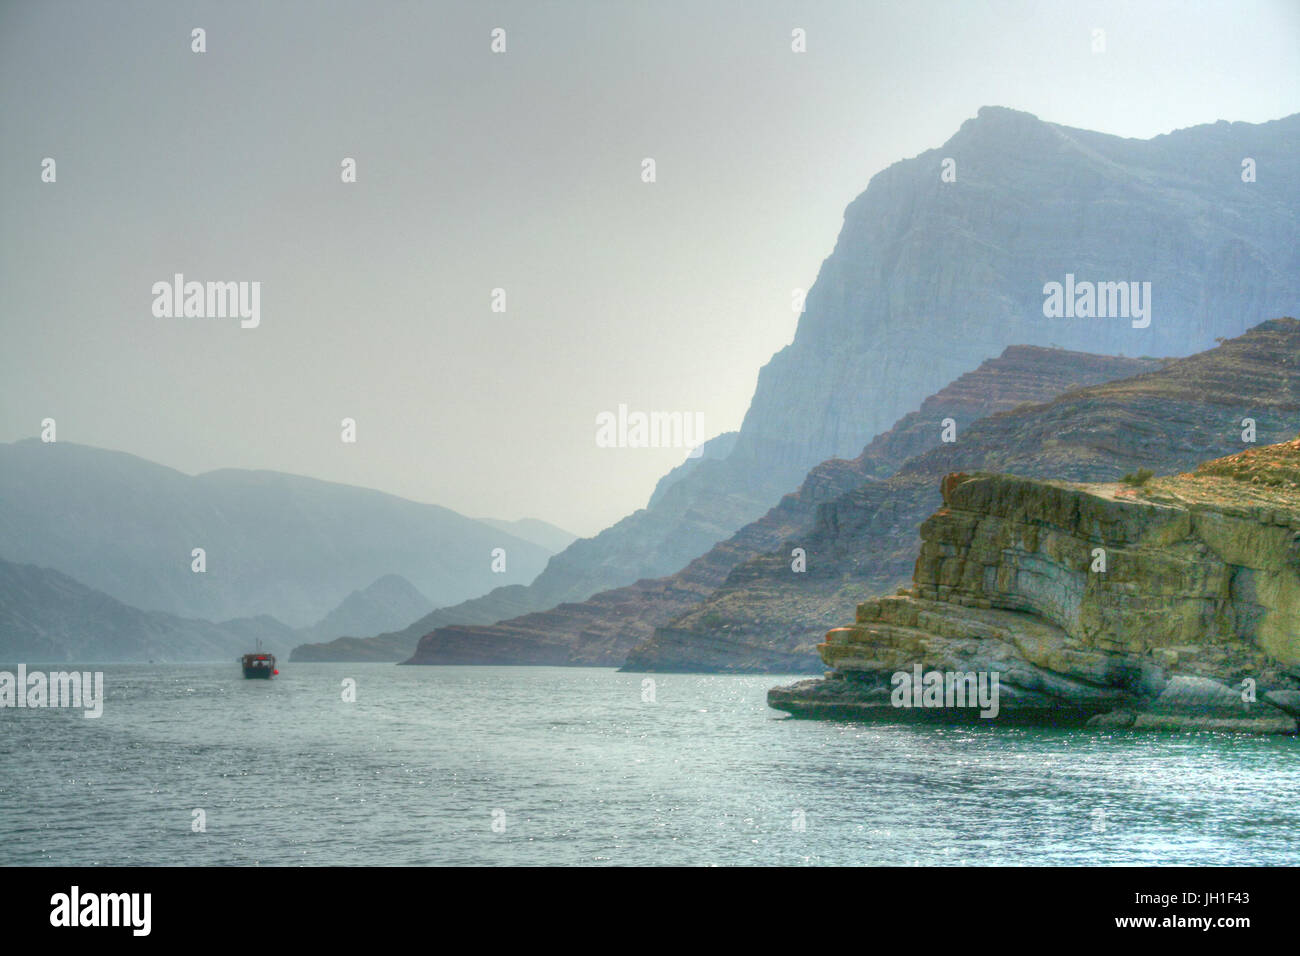 Boat trip on Khor ash Sham, Musandam Peninsula, Oman Stock Photo